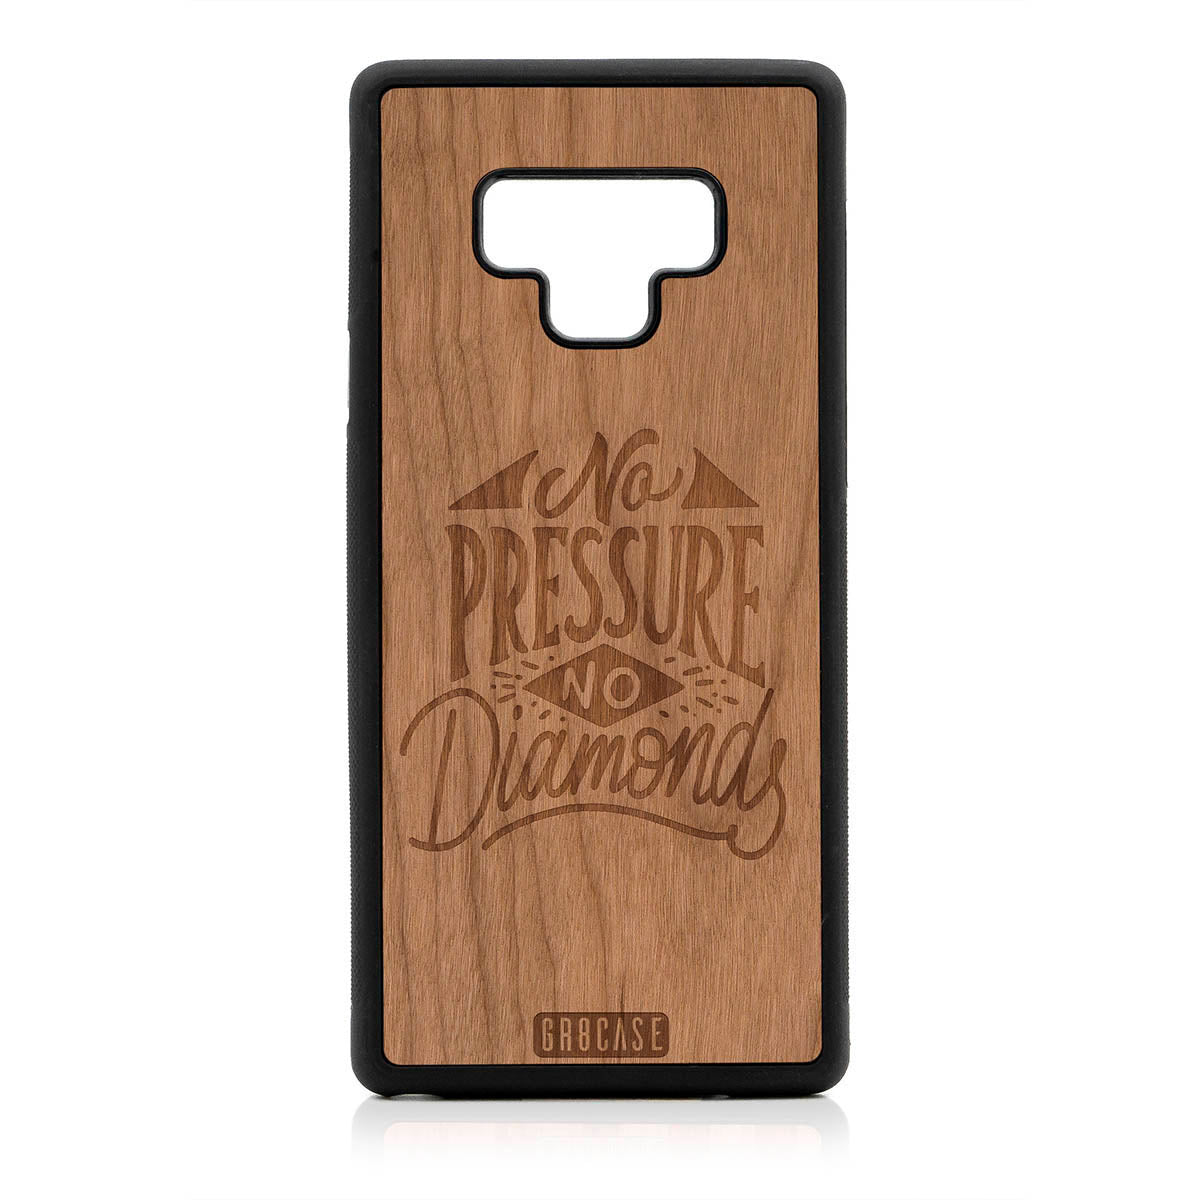 No Pressure No Diamonds Design Wood Case For Samsung Galaxy Note 9